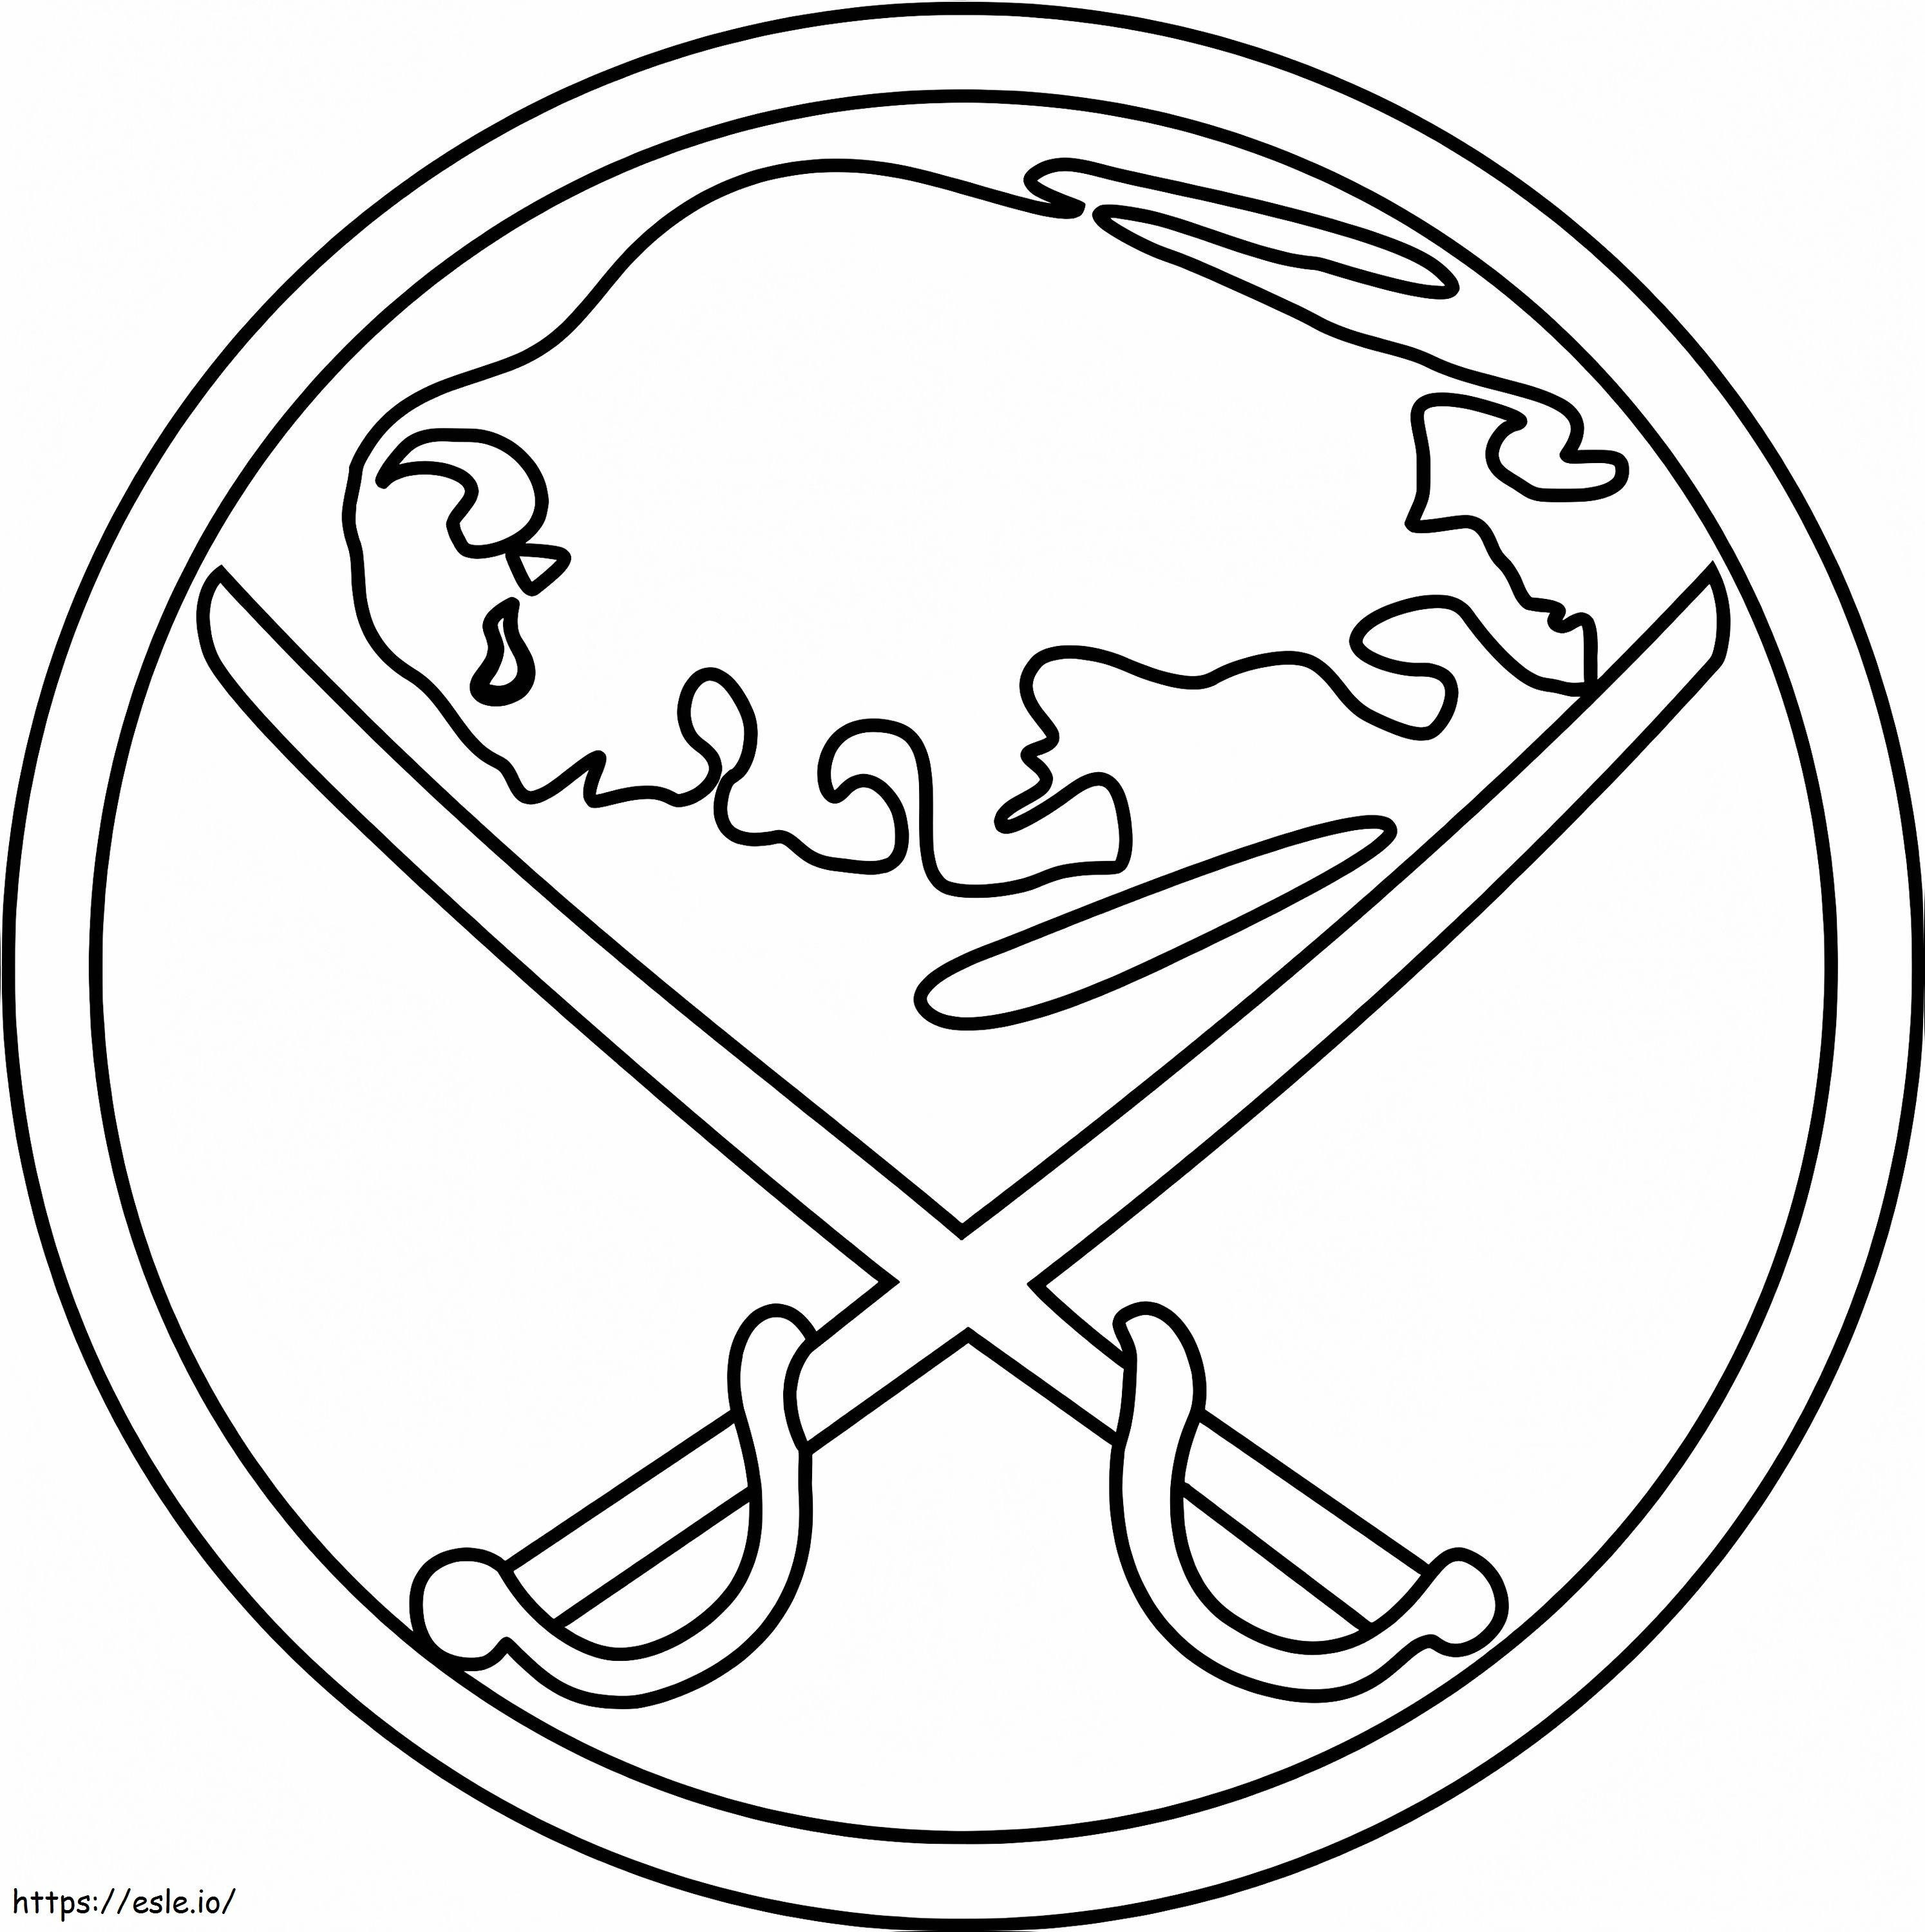 Buffalo Sabres Logo coloring page